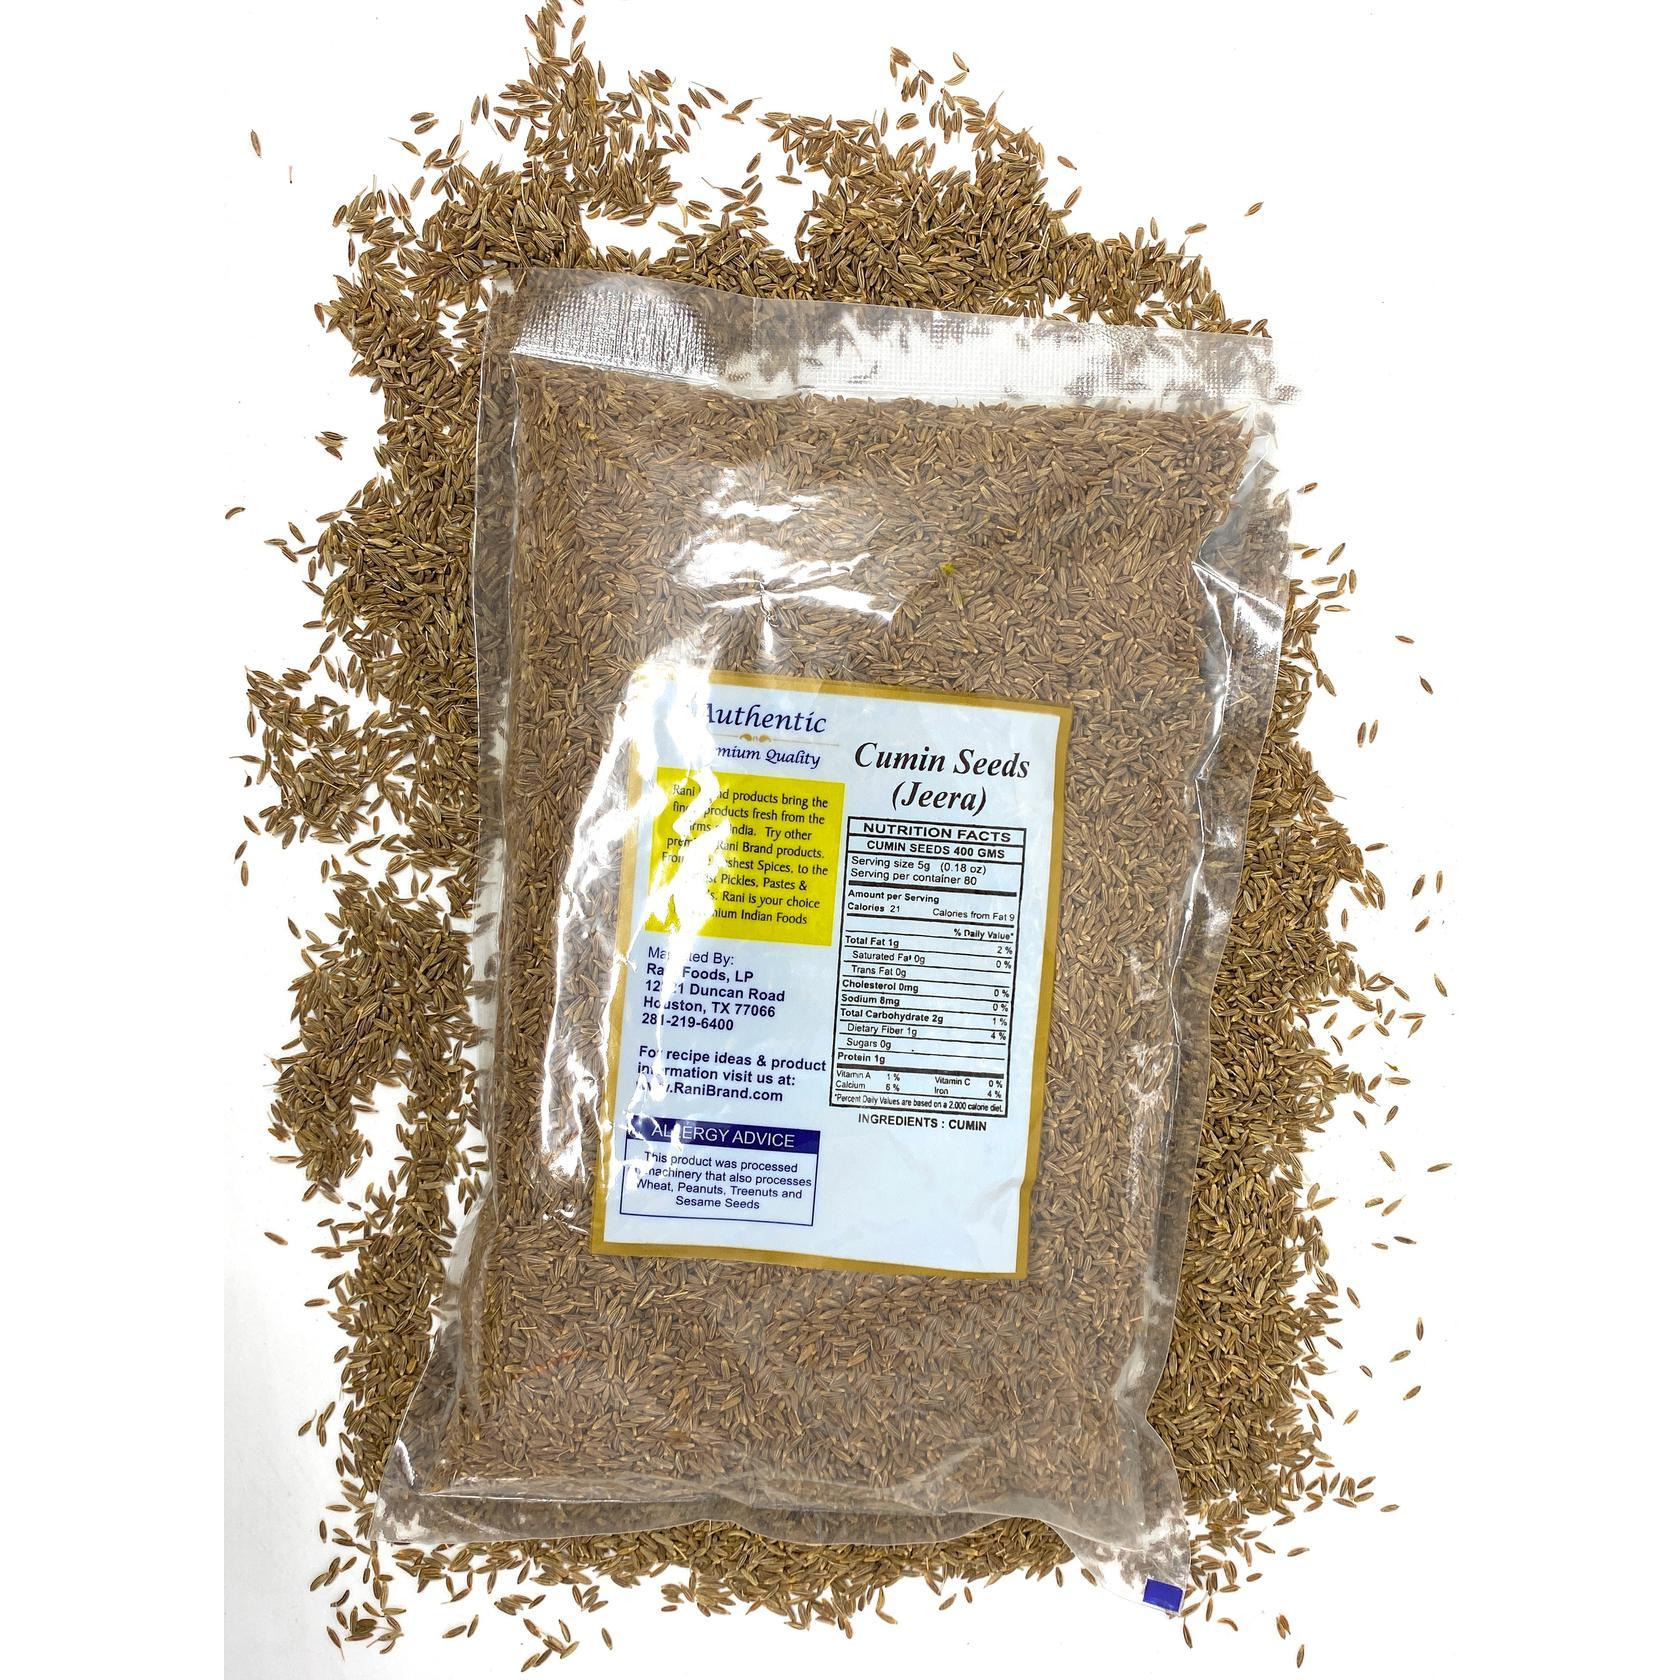 Rani Cumin Seeds Whole (Jeera) Spice 400gm (14oz) ~ All Natural | Gluten Friendly | NON-GMO | Vegan | Indian Origin